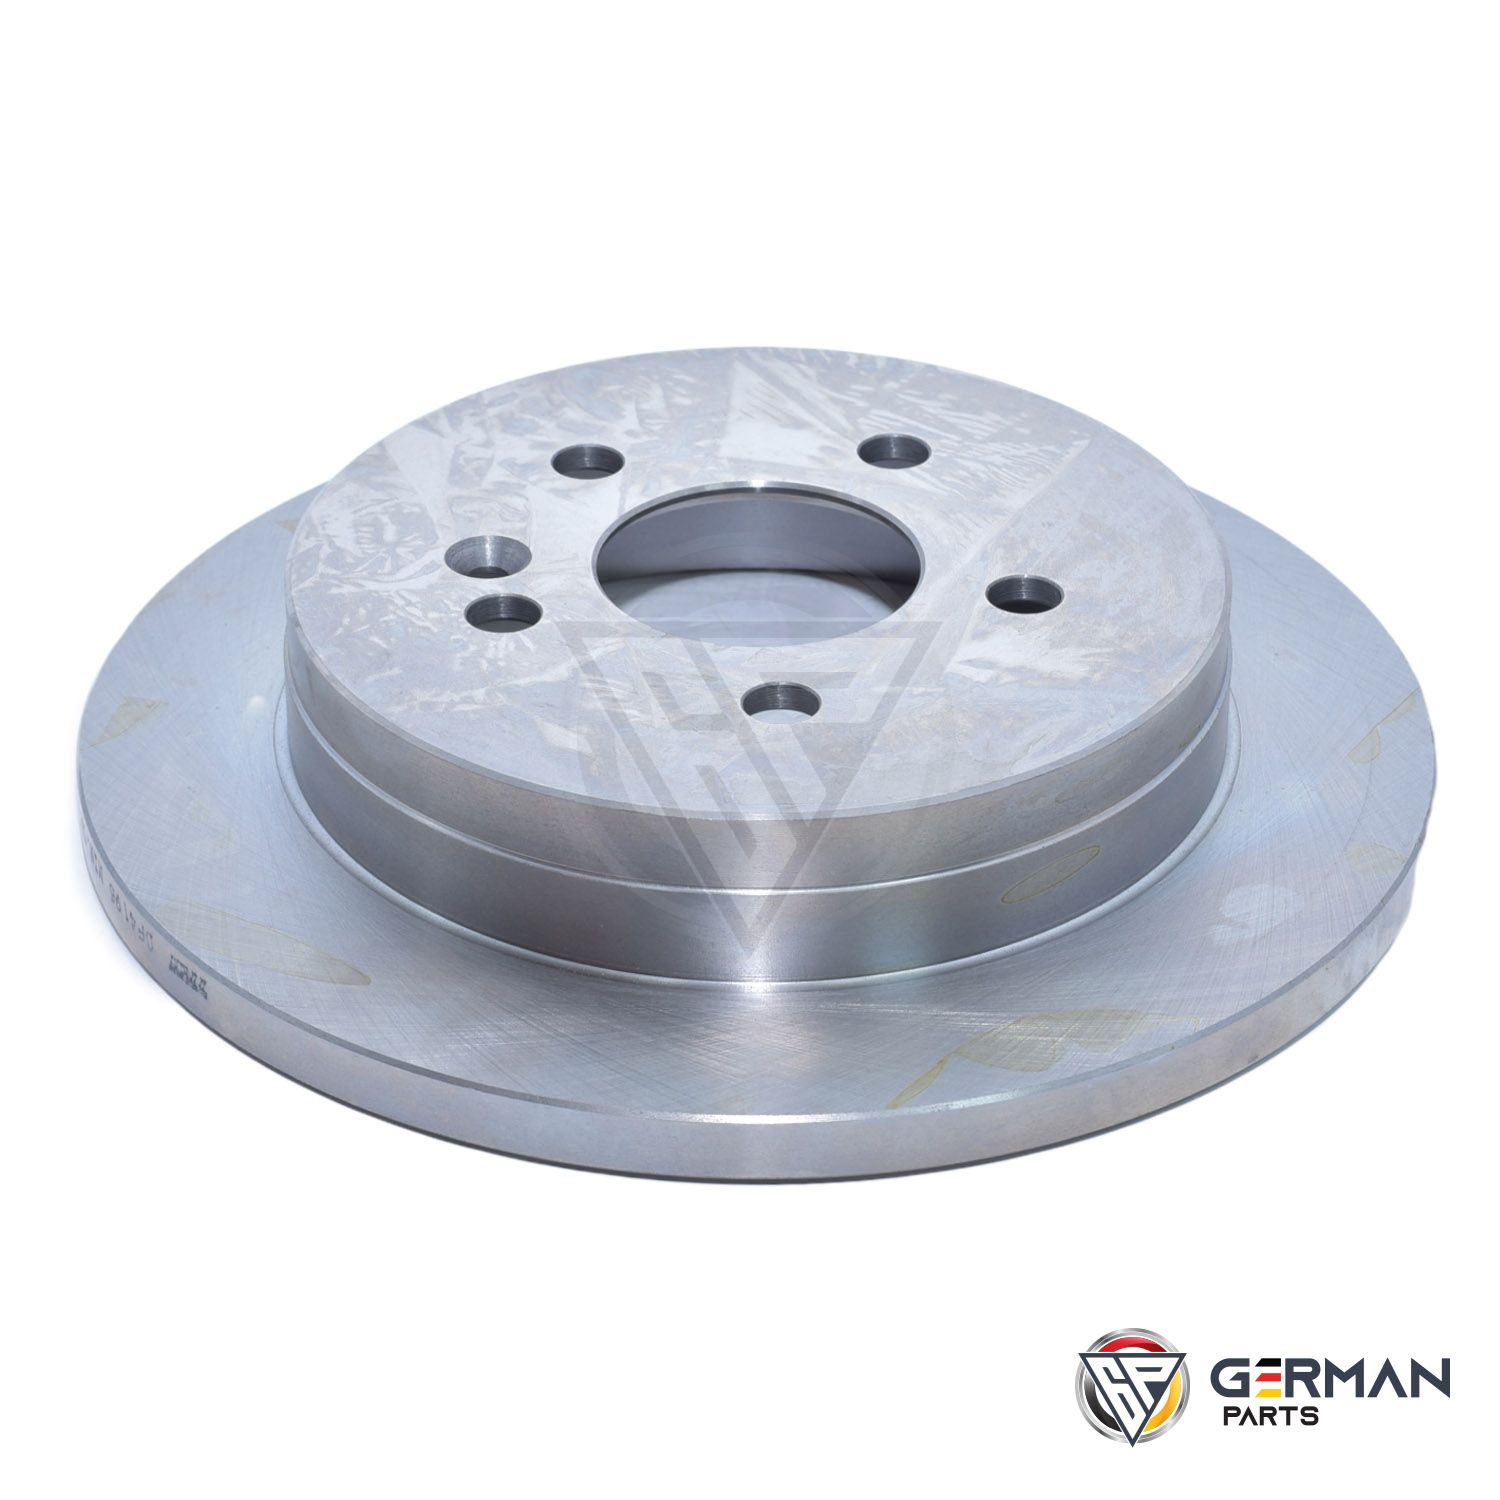 Buy TRW Rear Brake Disc 1634210112 - German Parts